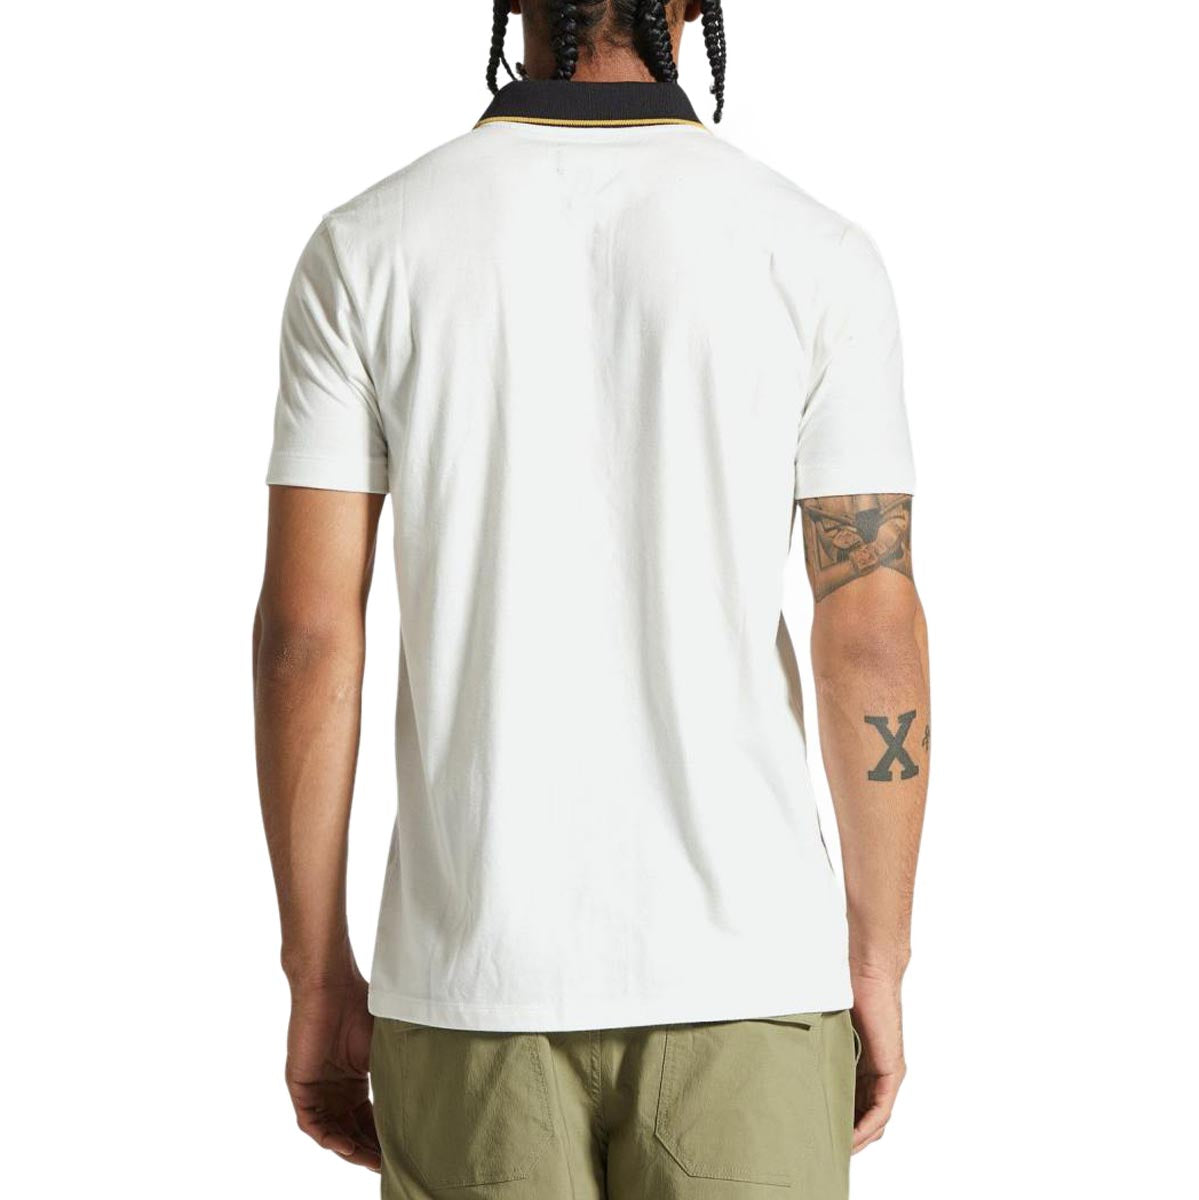 Brixton Mod Flex Polo Shirt - Off White/Black image 2